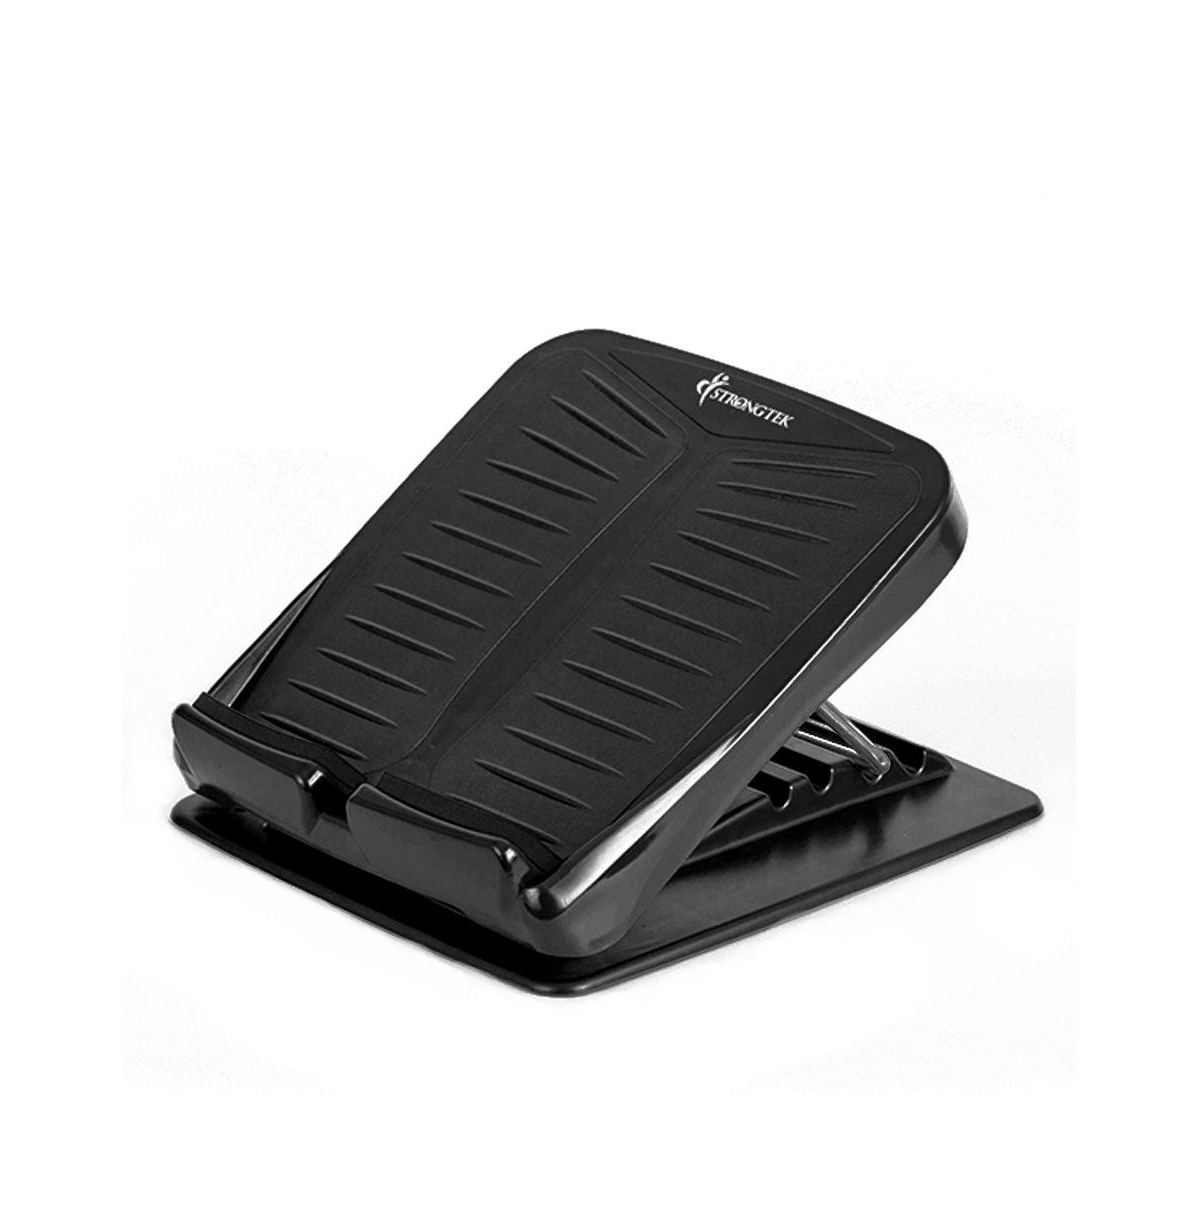 Plastic Portable Slant Board, Portable Adjustable Incline Foot Stool - Black